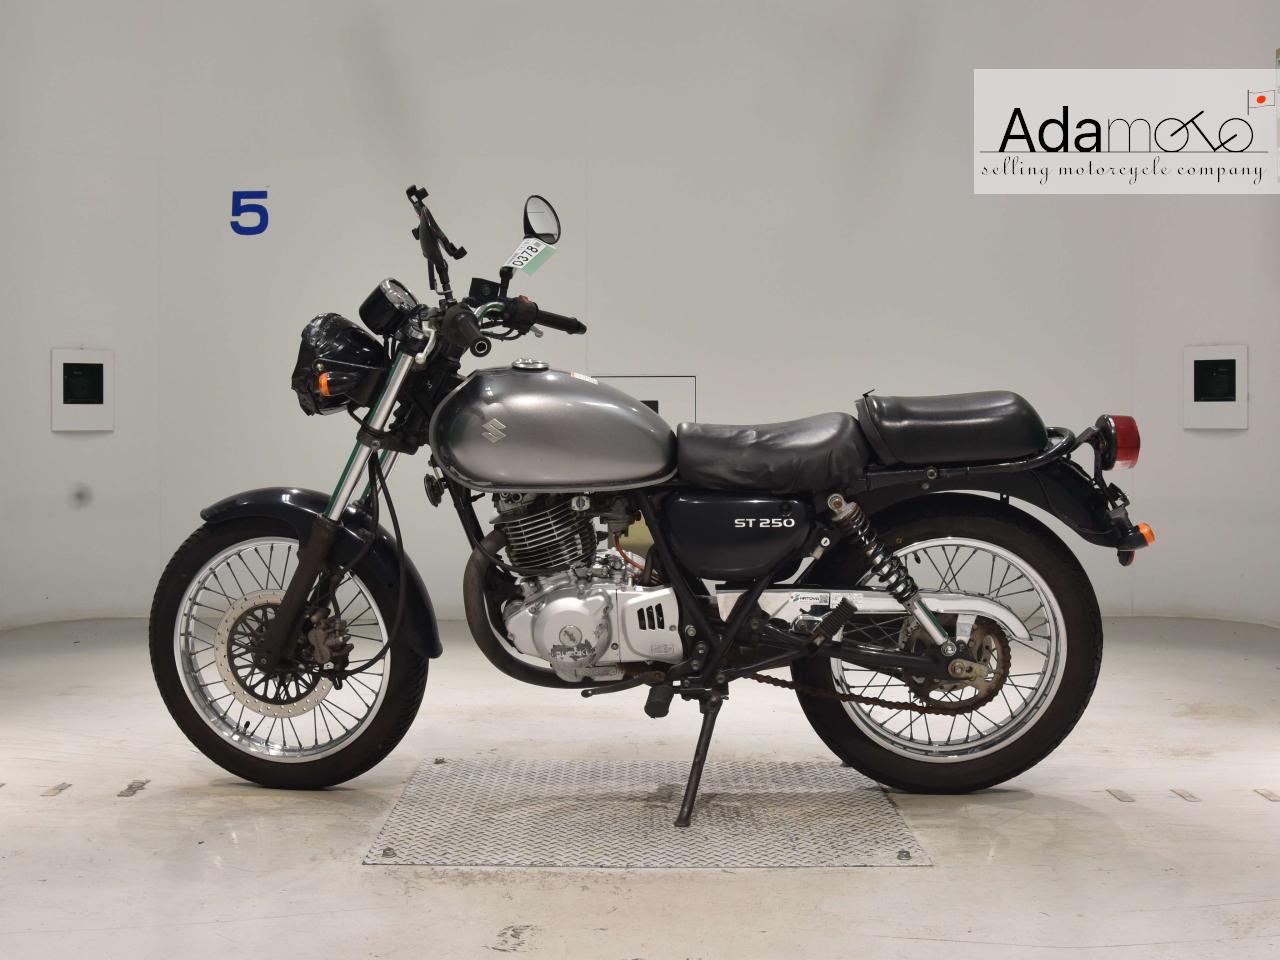 Suzuki ST250 - Adamoto - Motorcycles from Japan